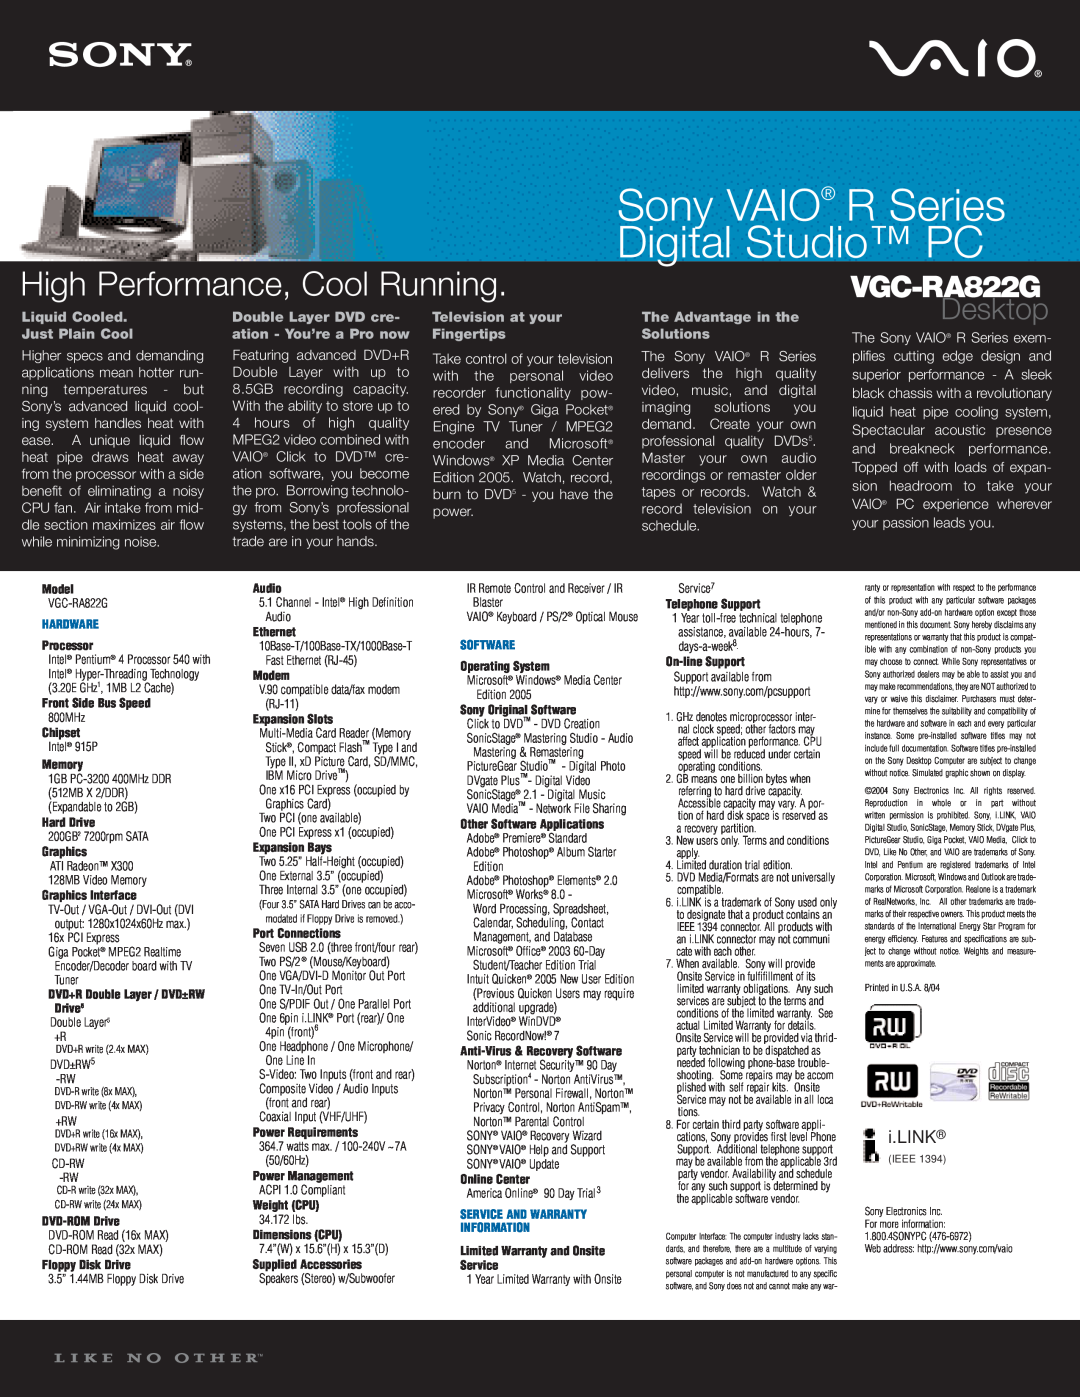 Sony VGC-RA822G dimensions Sony VAIO R Series, Digital Studio PC, High Performance, Cool Running, Desktop, i.LINK 